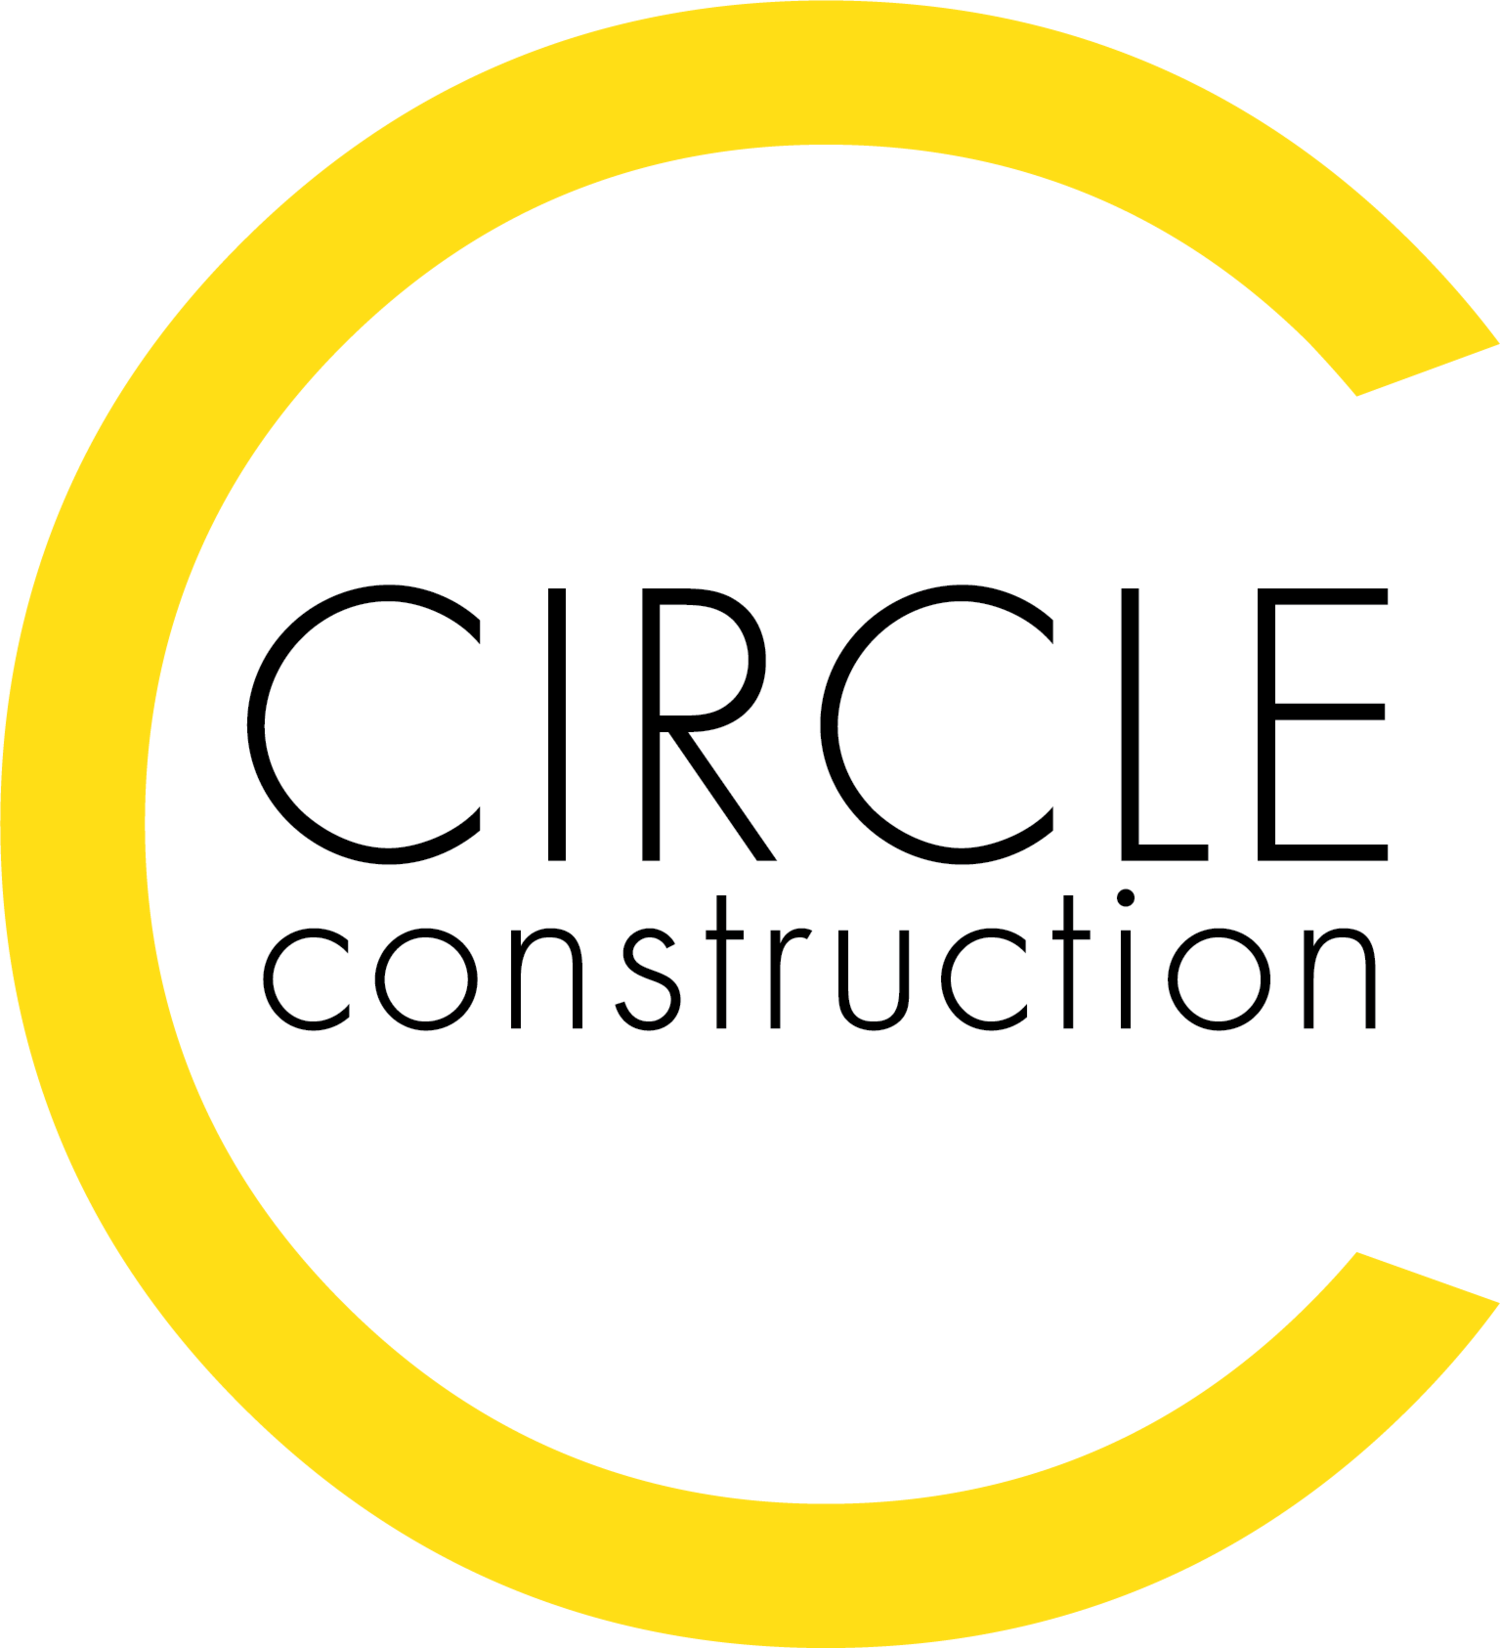 Circle Construction Ltd